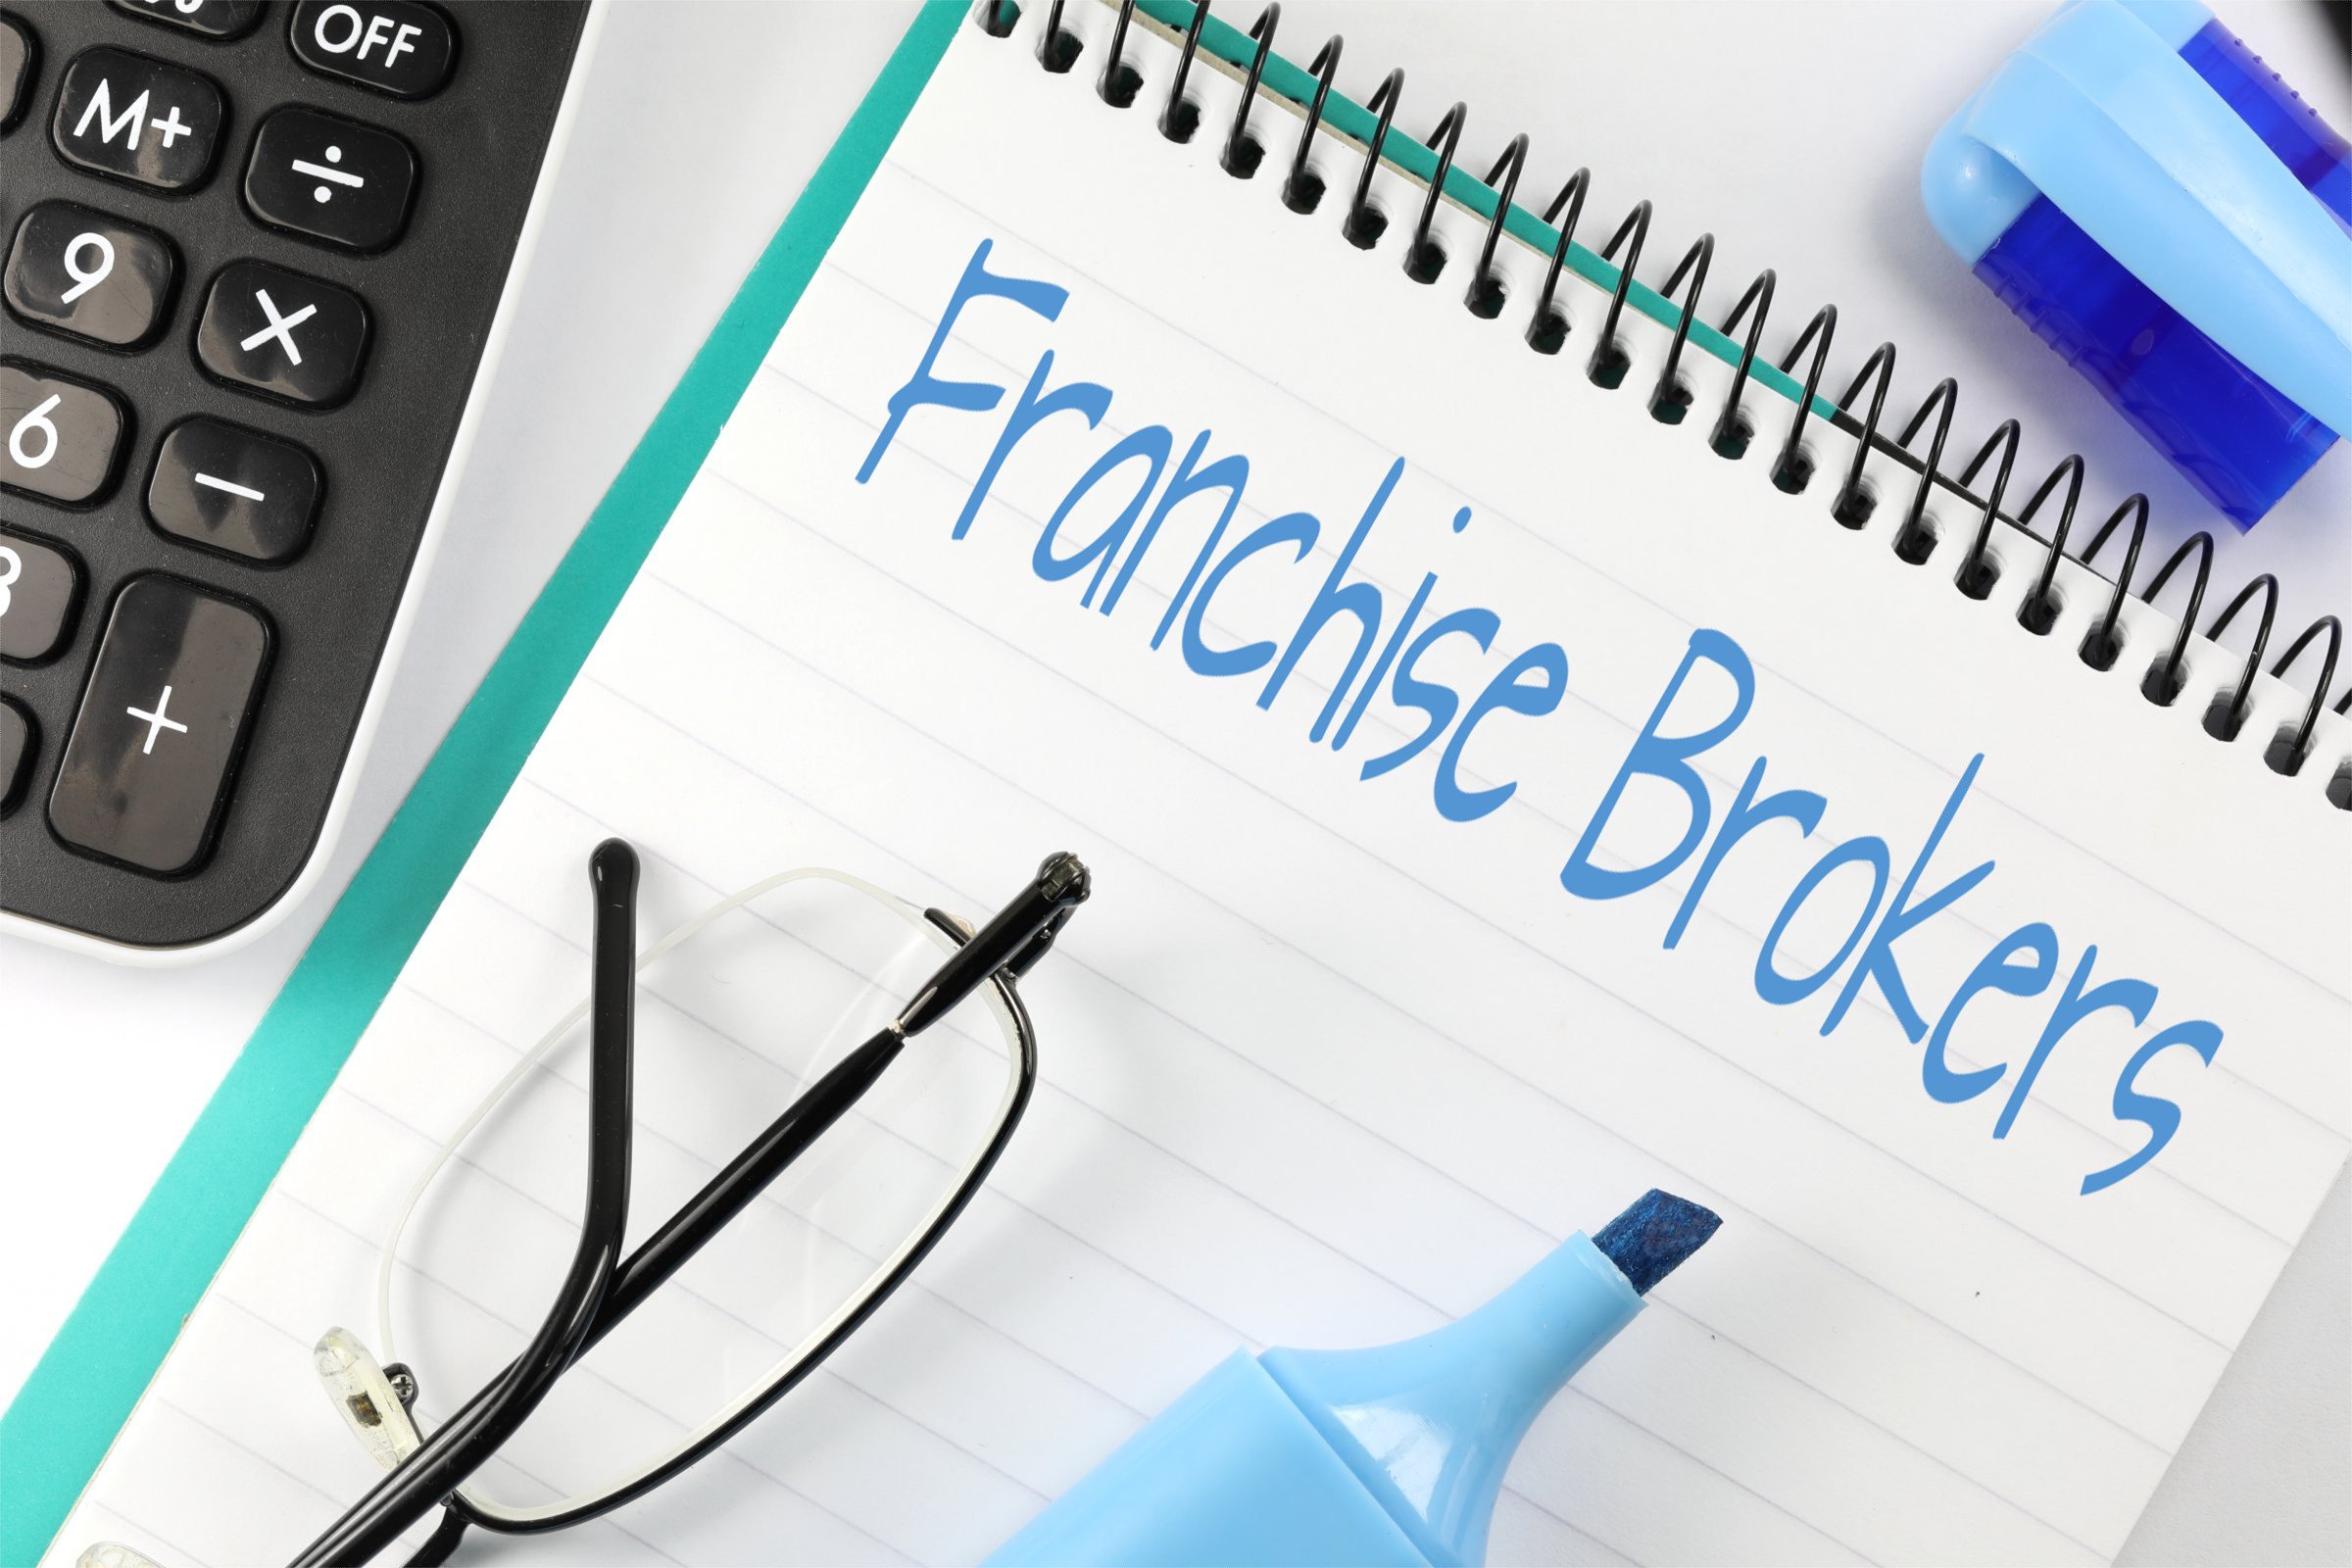 franchise brokers